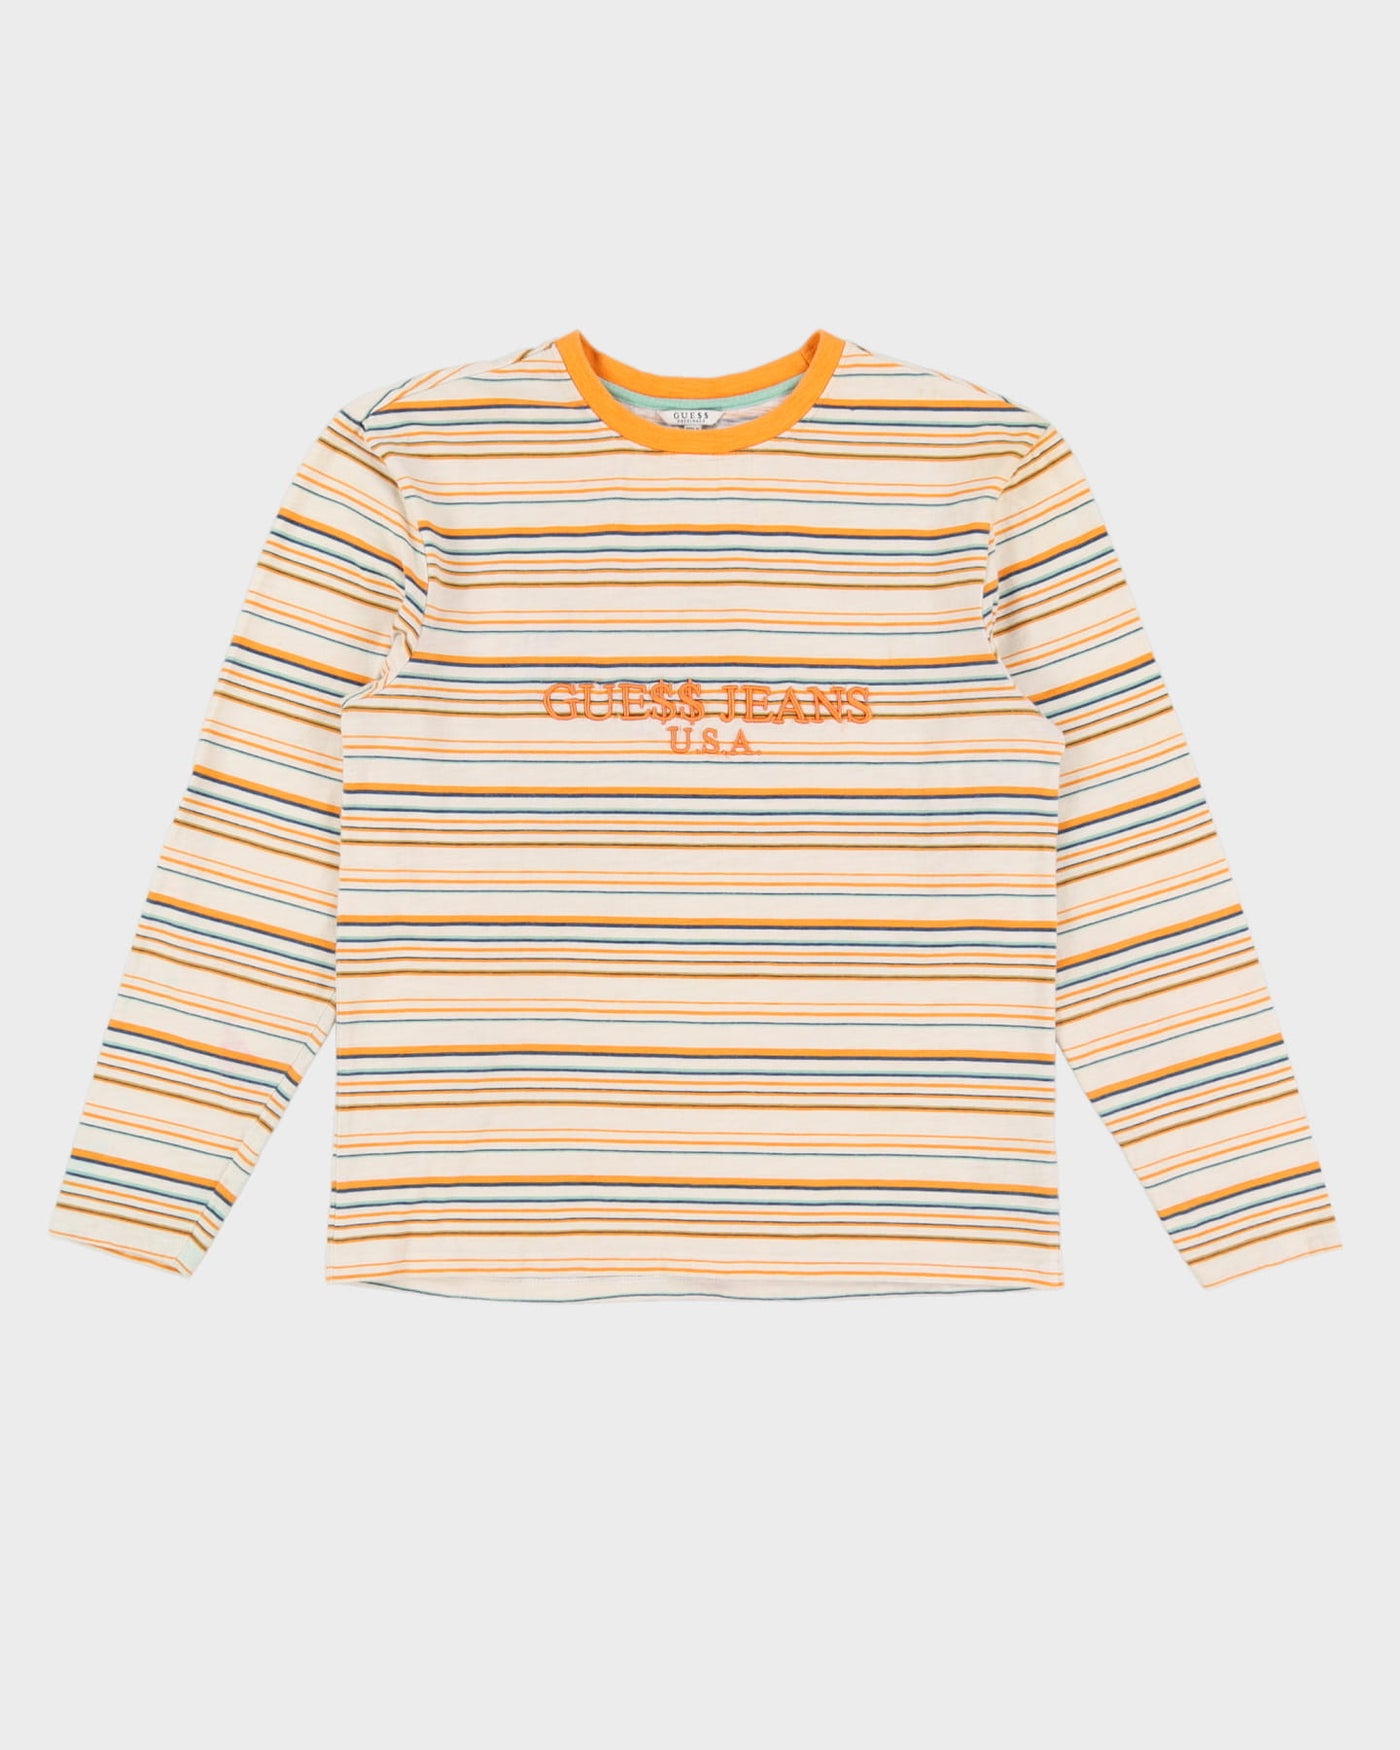 ASAP ROCKY X Guess Orange Striped Long Sleeve T-Shirt - XS